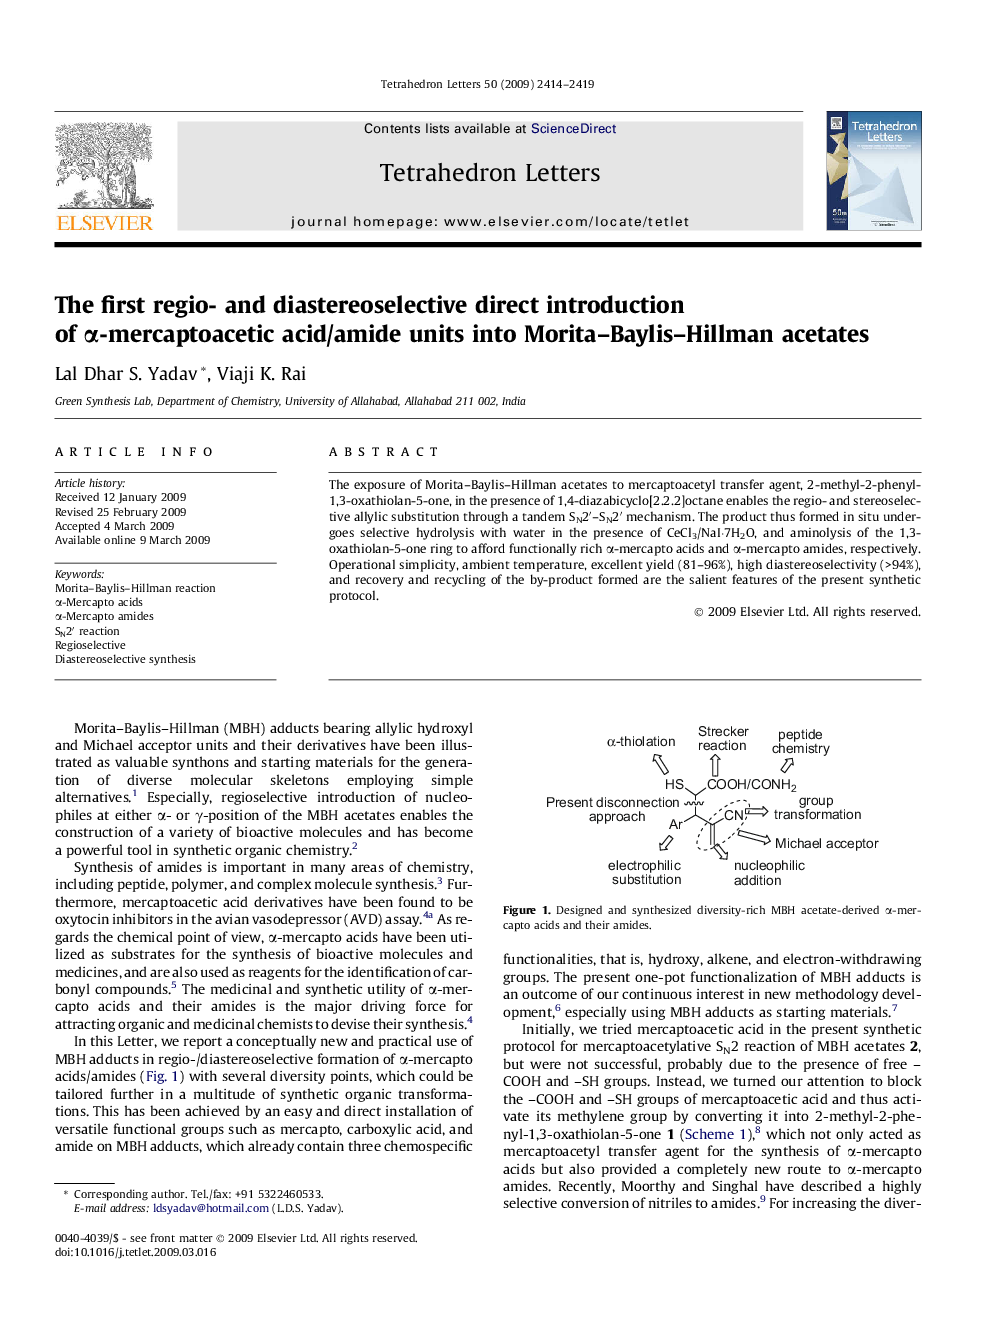 The first regio- and diastereoselective direct introduction of Î±-mercaptoacetic acid/amide units into Morita-Baylis-Hillman acetates